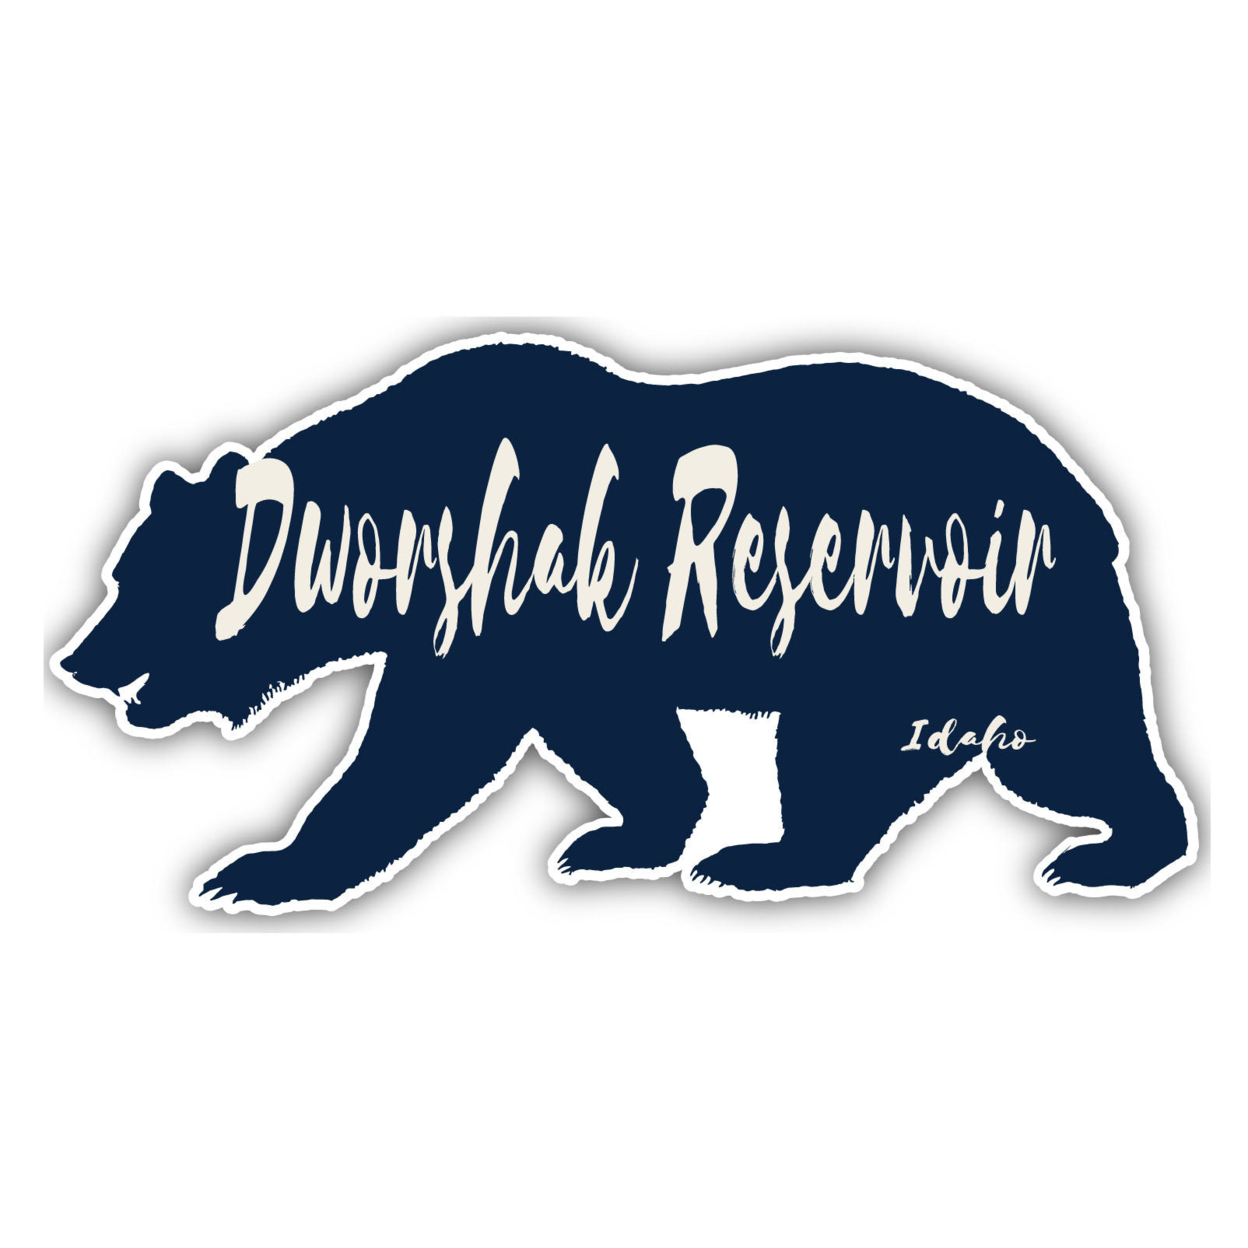 Dworshak Reservoir Idaho Souvenir Decorative Stickers (Choose Theme And Size) - Single Unit, 2-Inch, Tent